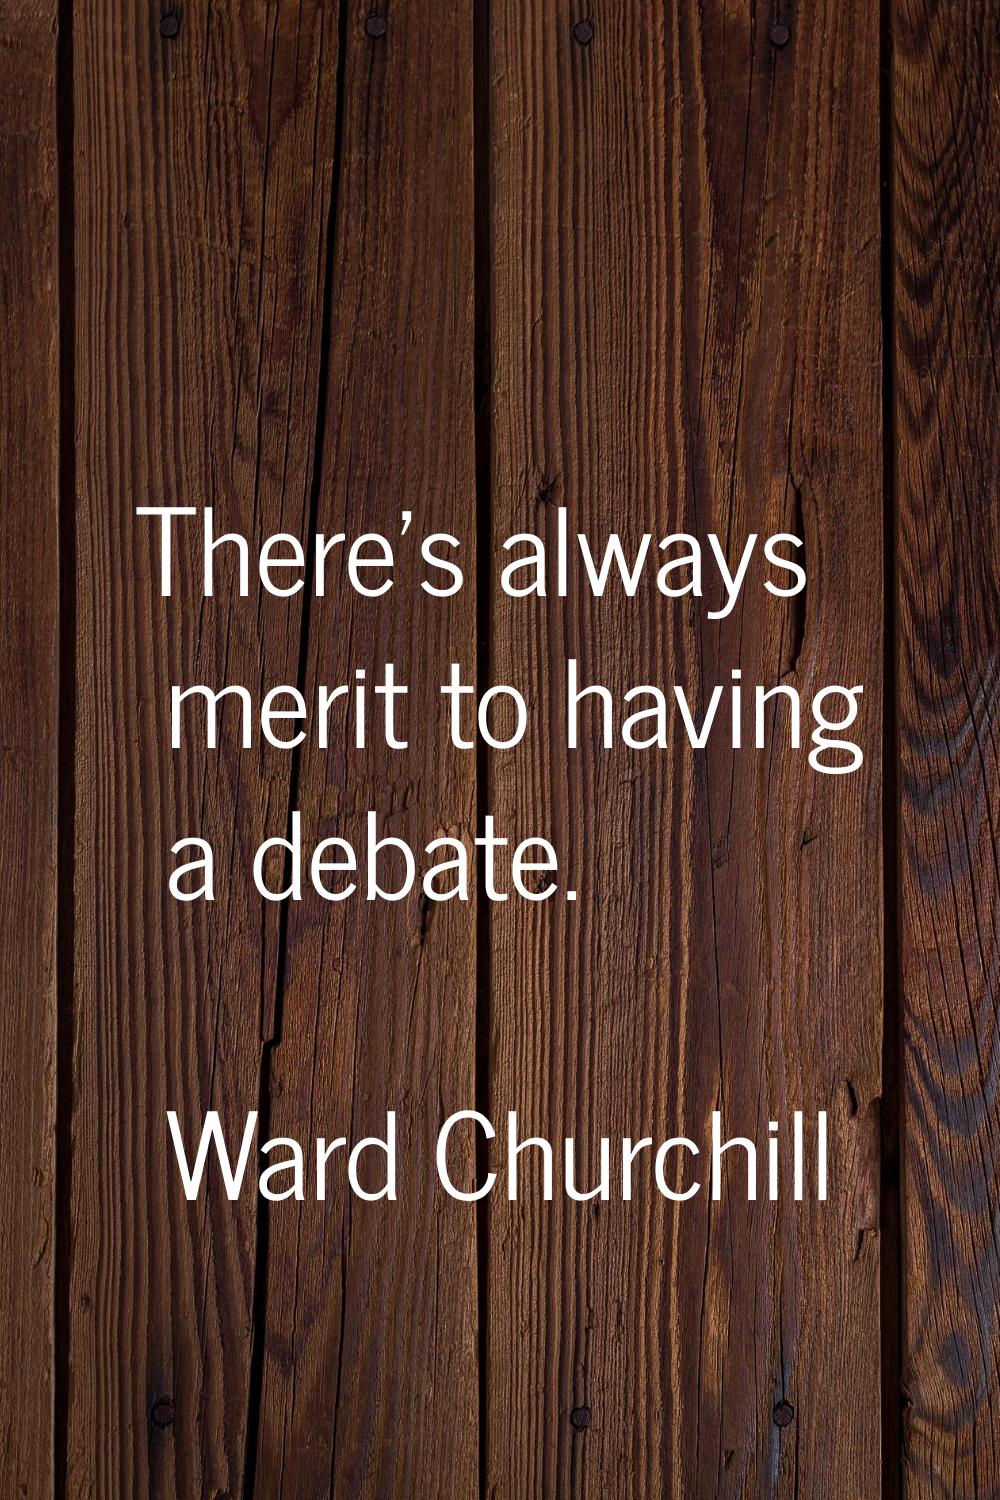 There's always merit to having a debate.